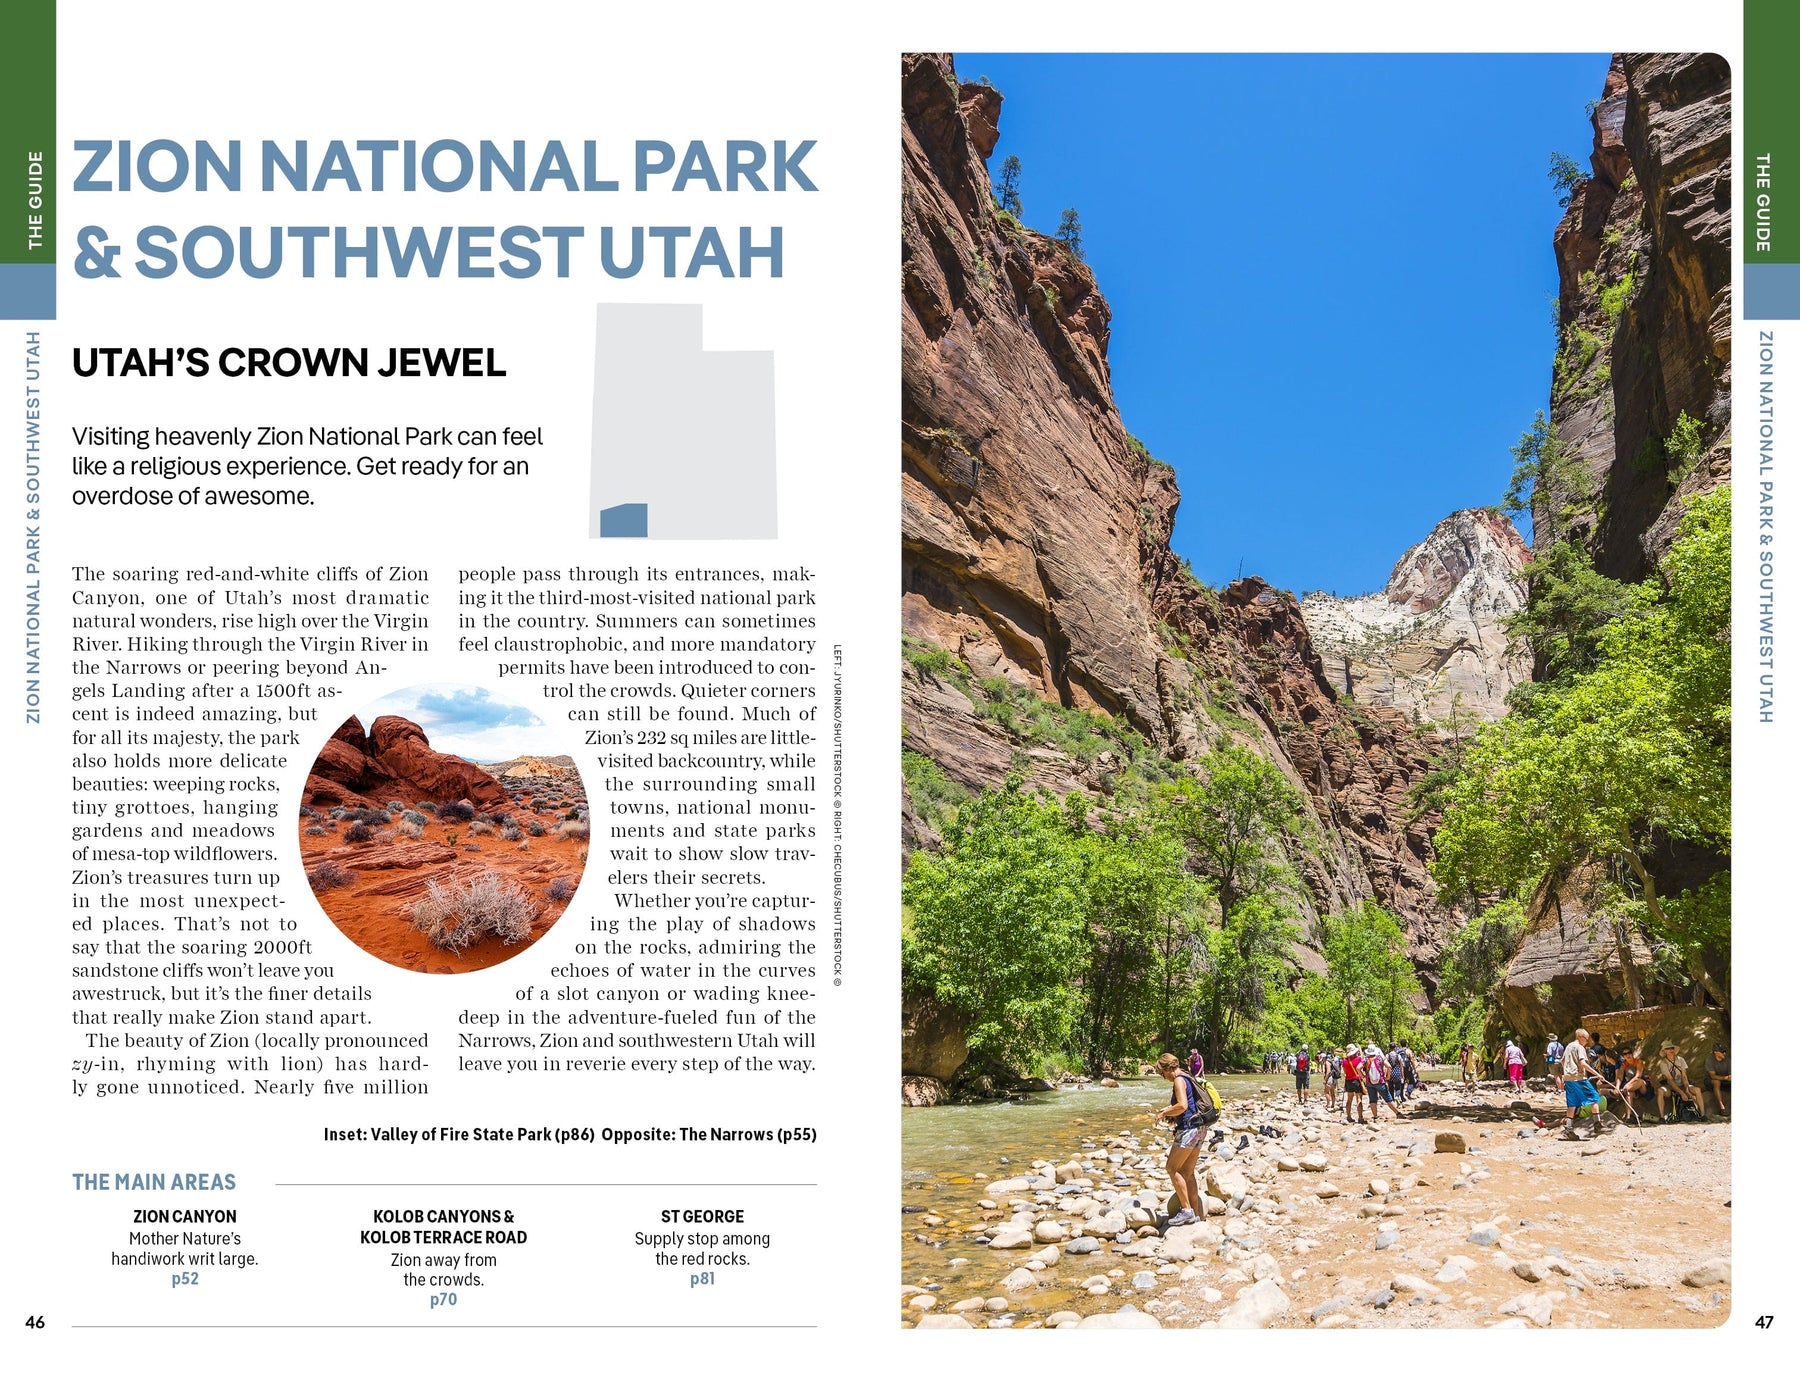 Utah's National Parks